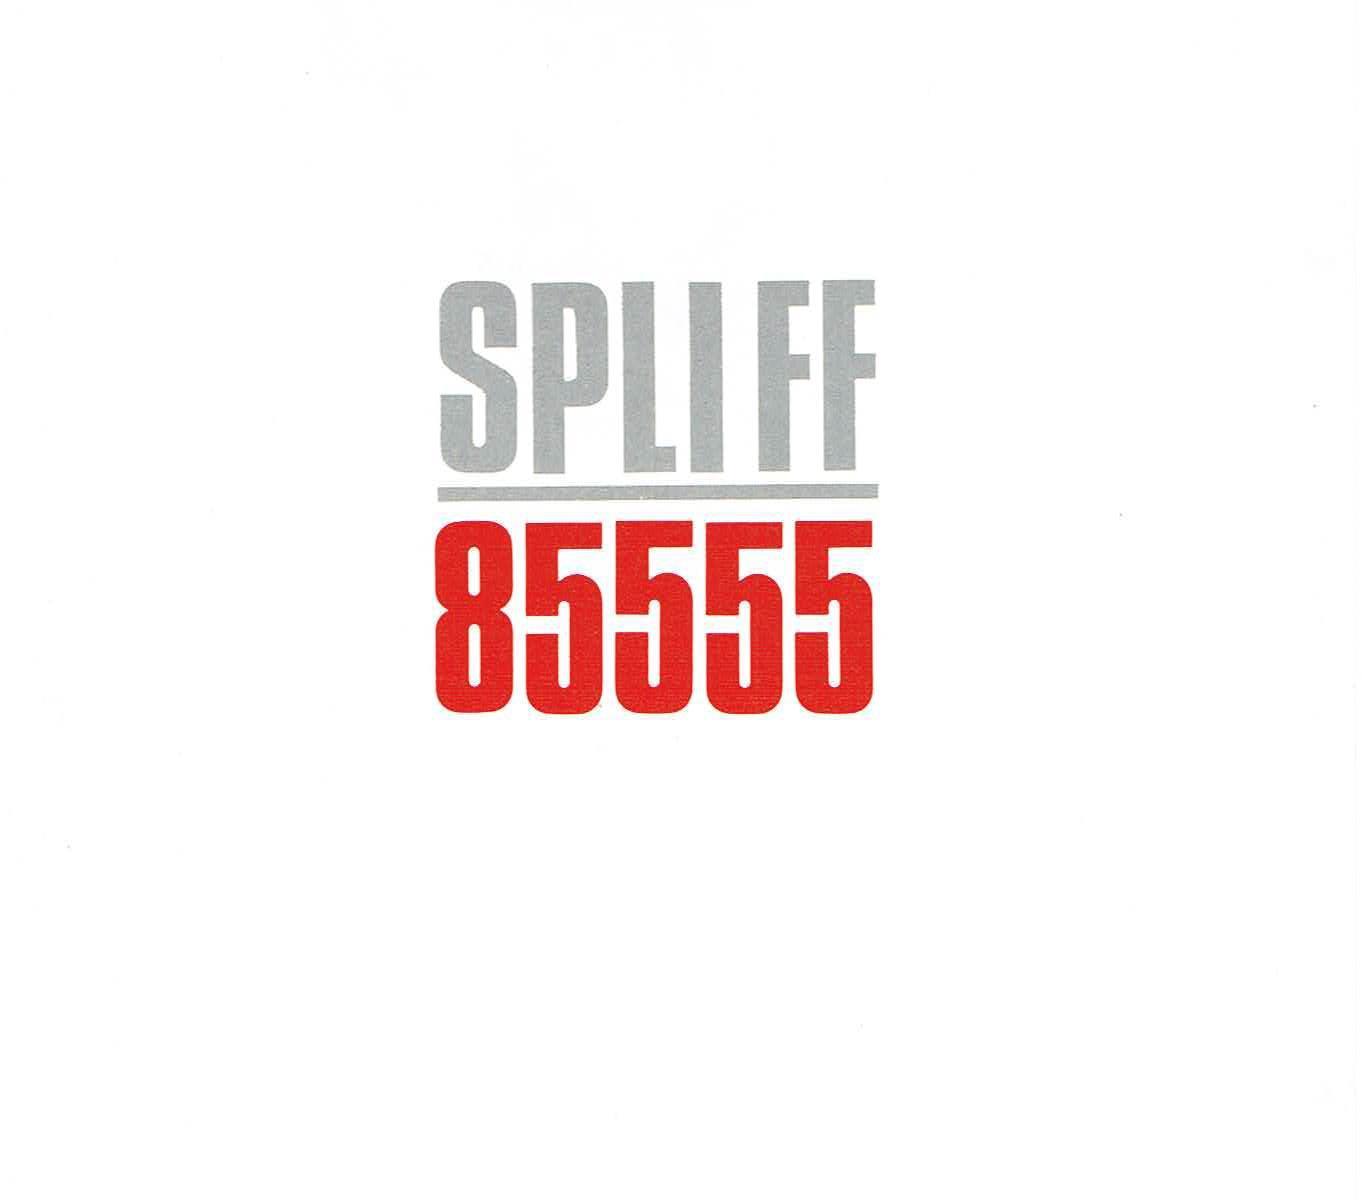 spliff-85555-cd-cover_838697.jpg